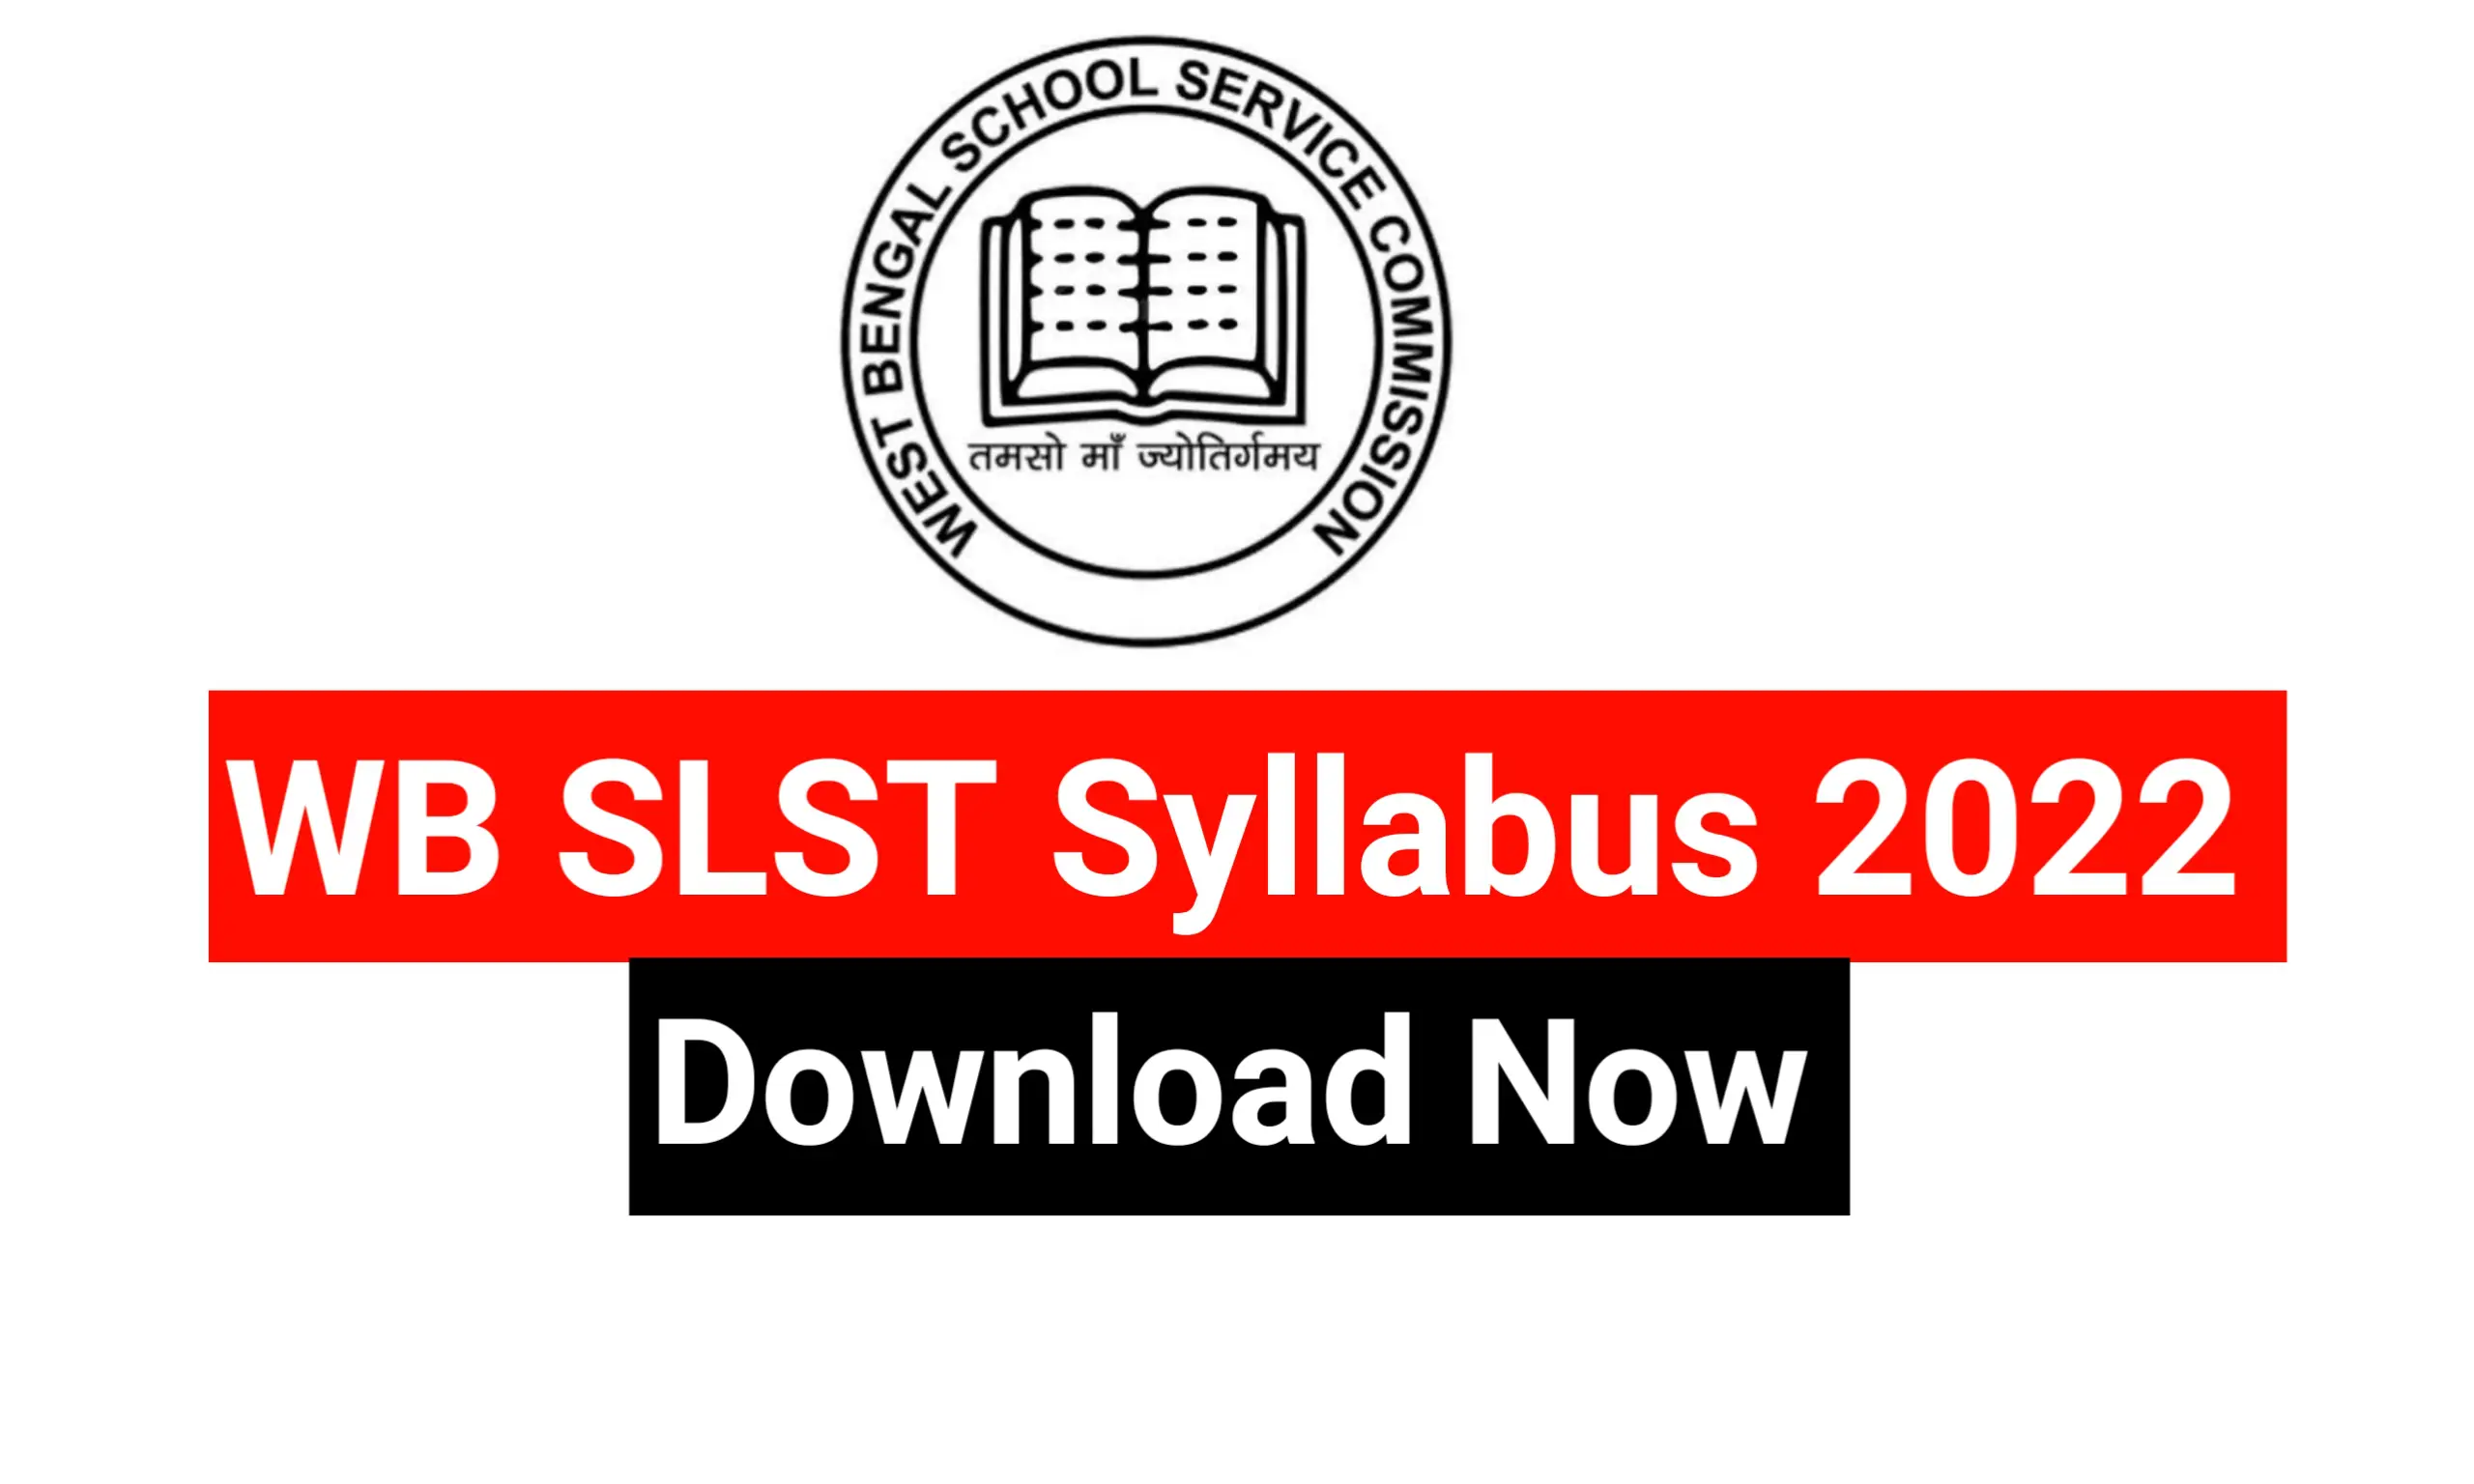 WB SLST Syllabus 2022 PDF Download